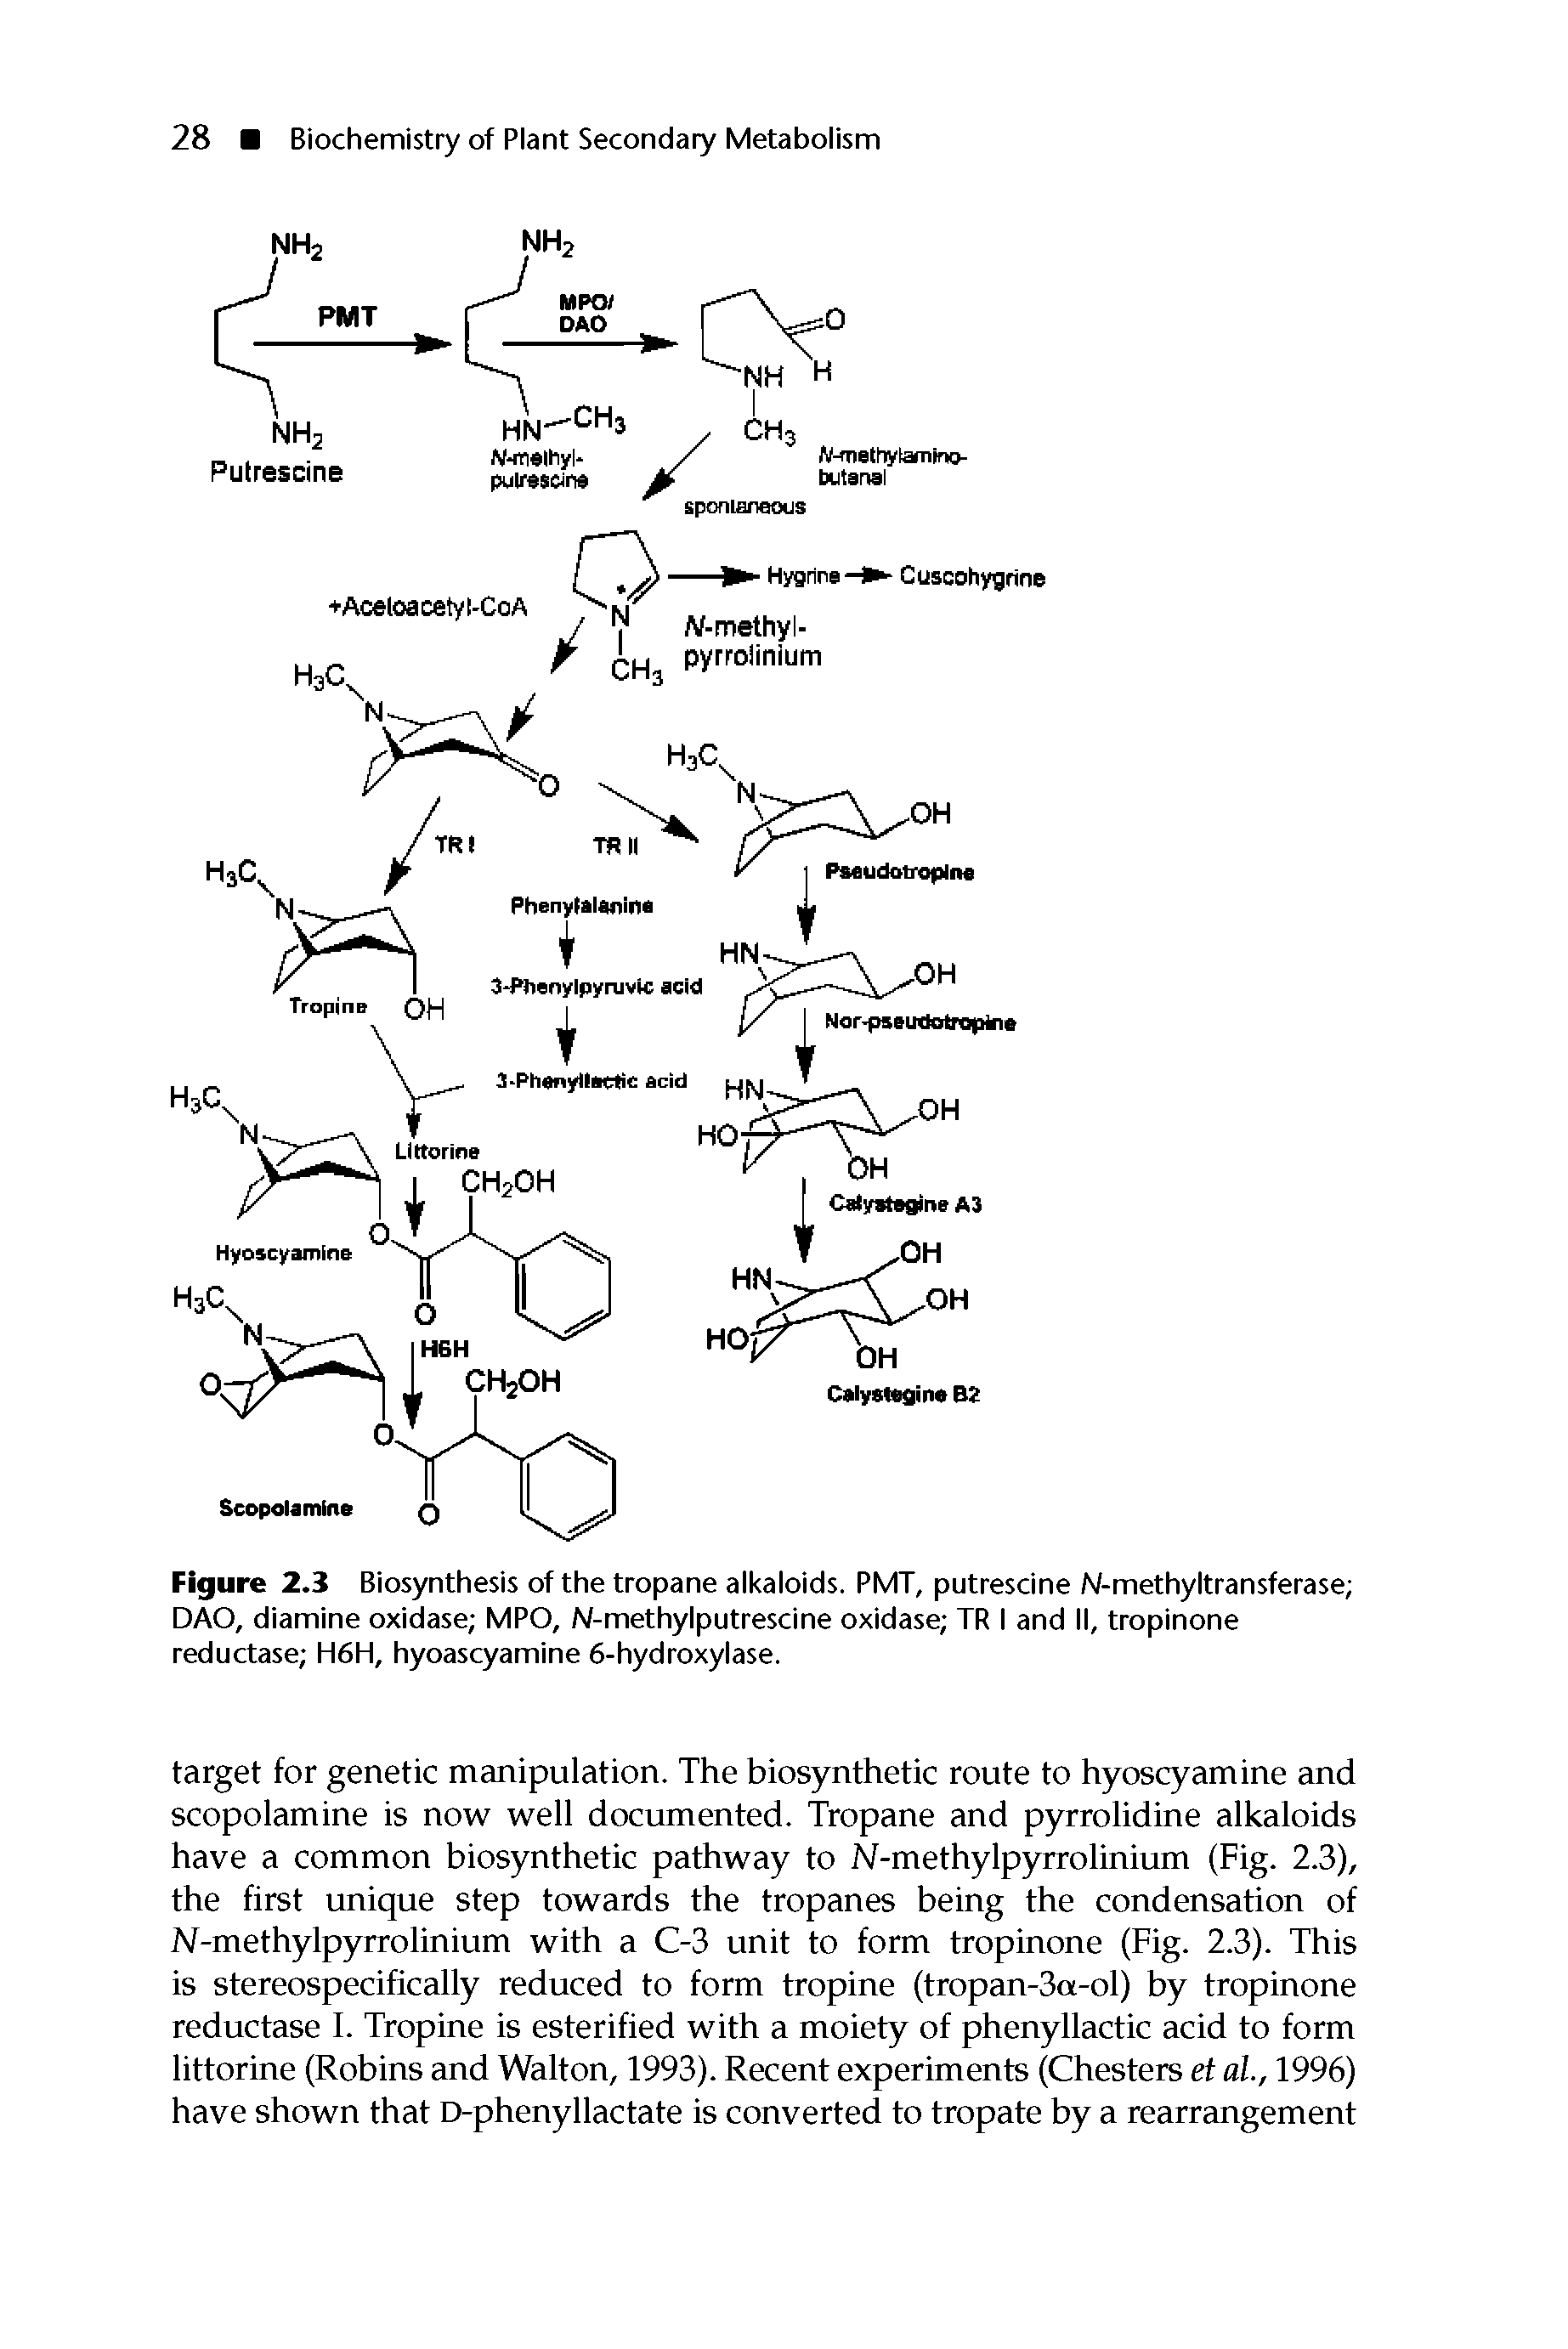 Figure 2.3 Biosynthesis of the tropane alkaloids. PMT, putrescine N-methyltransferase DAO, diamine oxidase MPO, N-methylputrescine oxidase TR I and II, tropinone reductase H6H, hyoascyamine 6-hydroxylase.